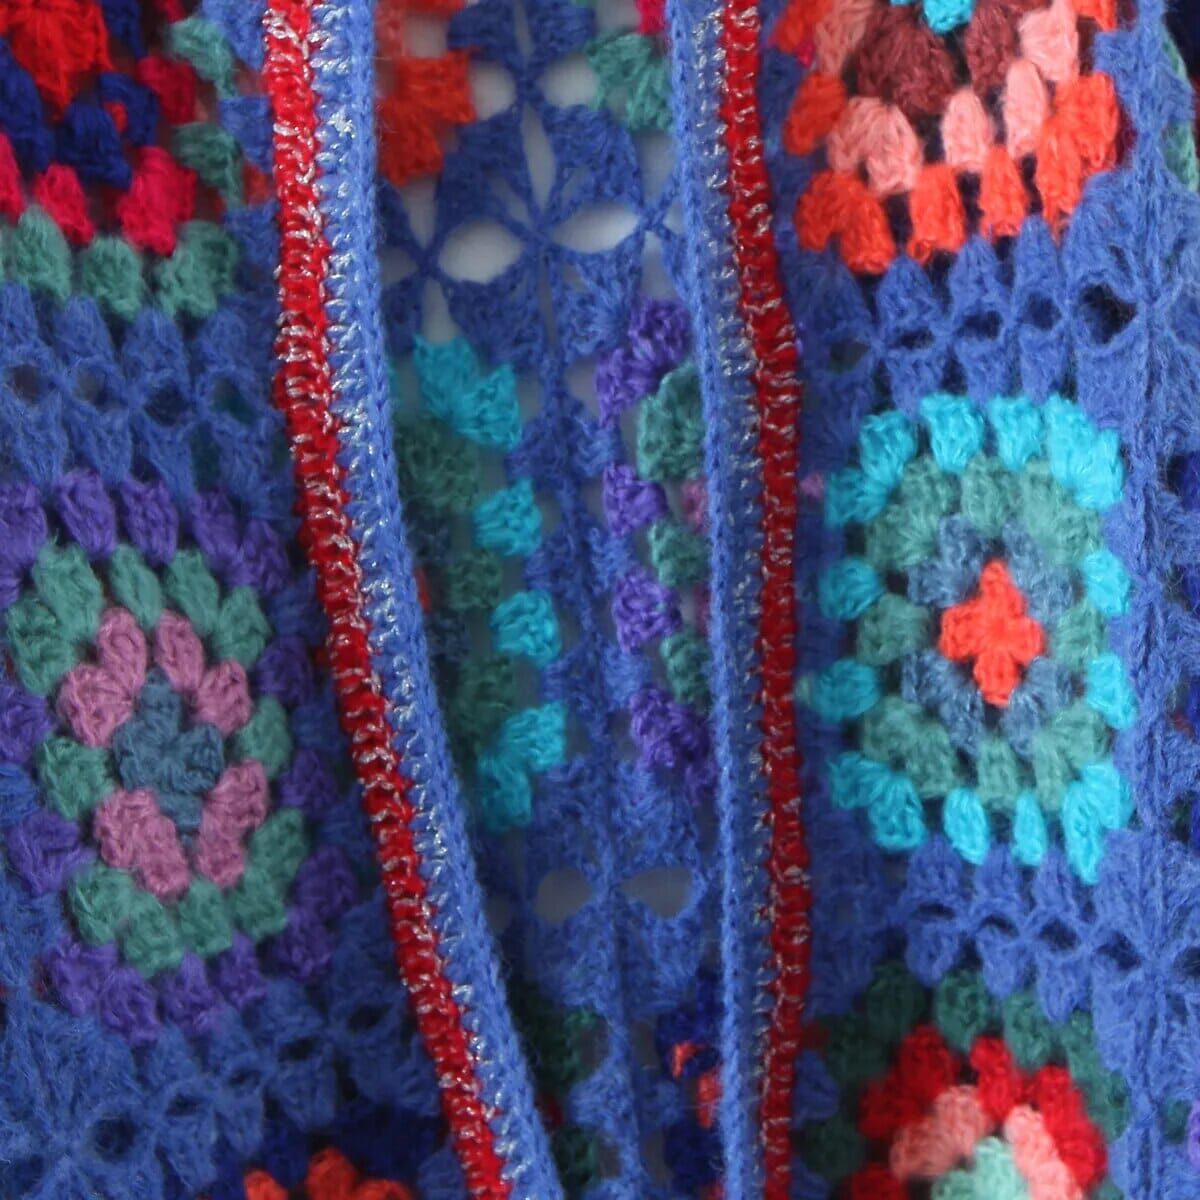 Bohemia Vintage Colored Plaid Flower Granny Square Hand Crochet Hooded Crop Cardigan Coats & Jackets jehouze 